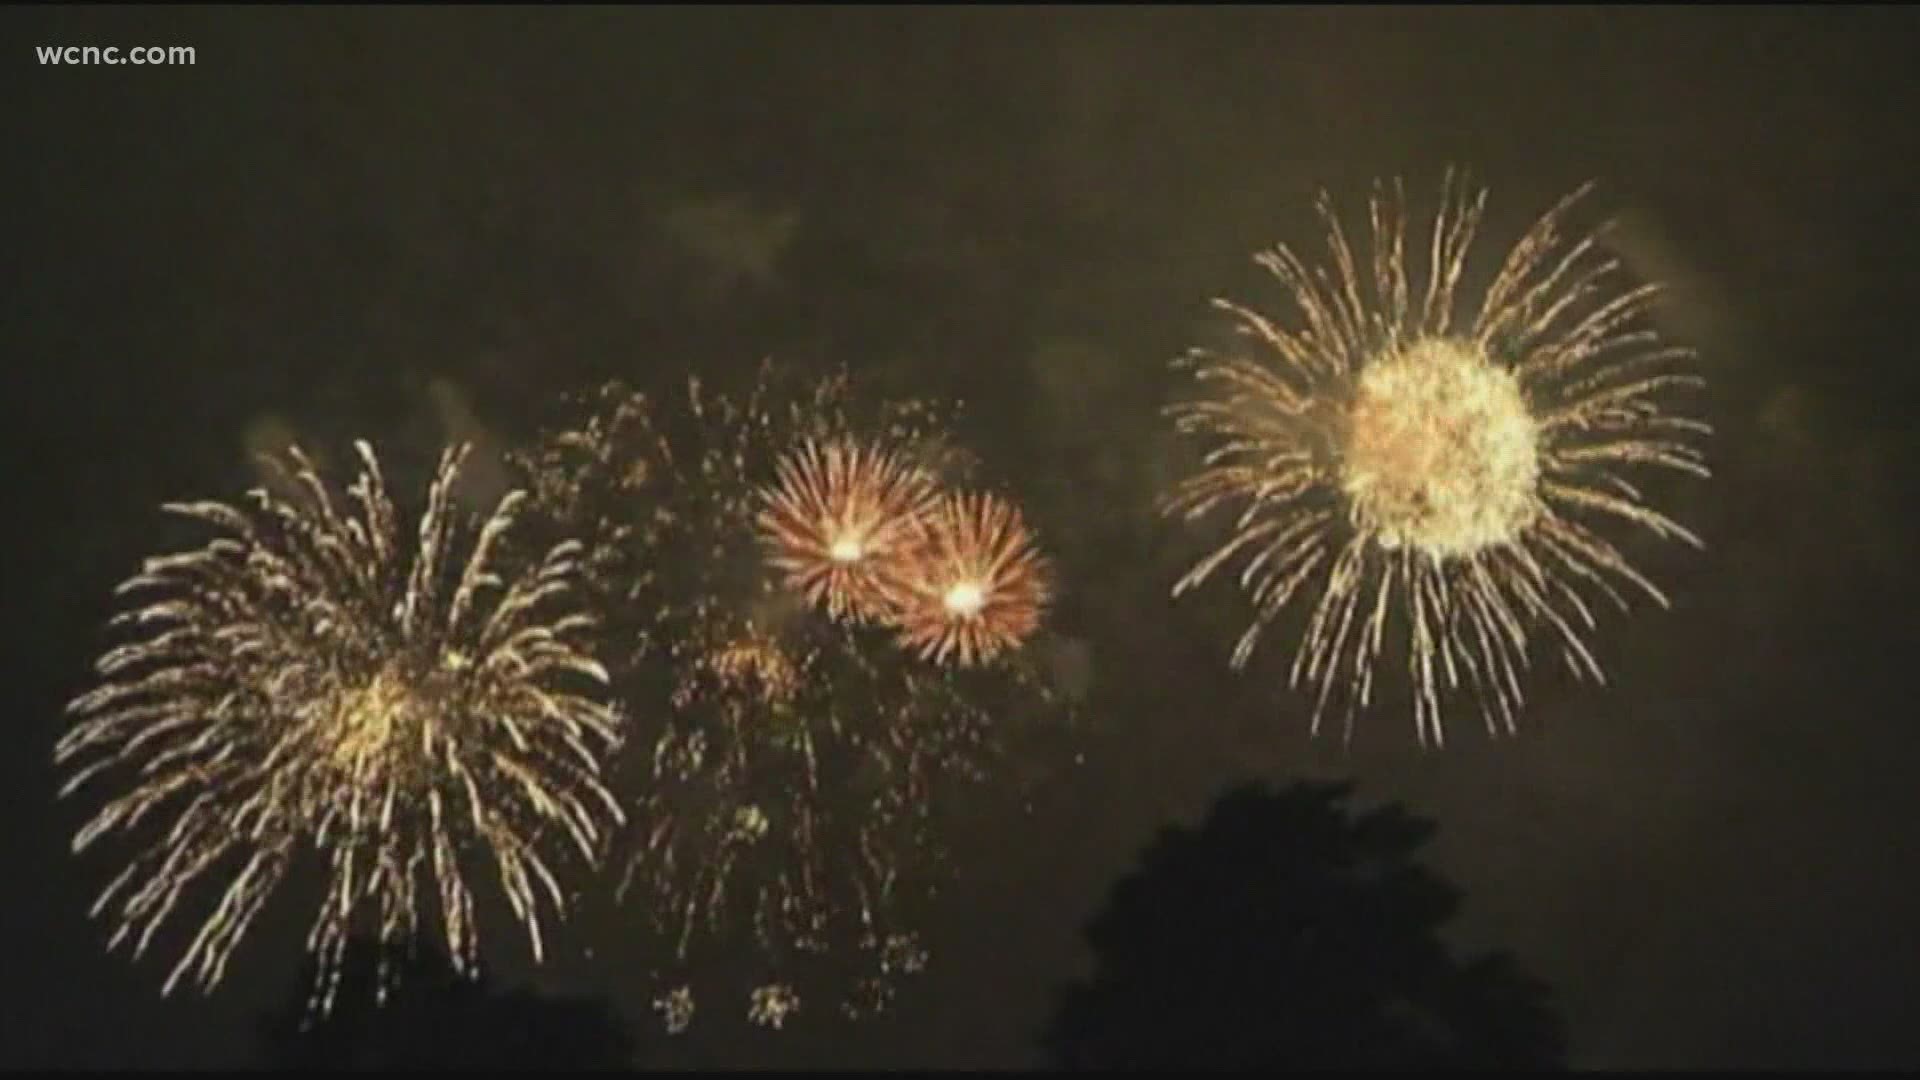 The season starts with a bang this year as firework demand skyrockets amid delays